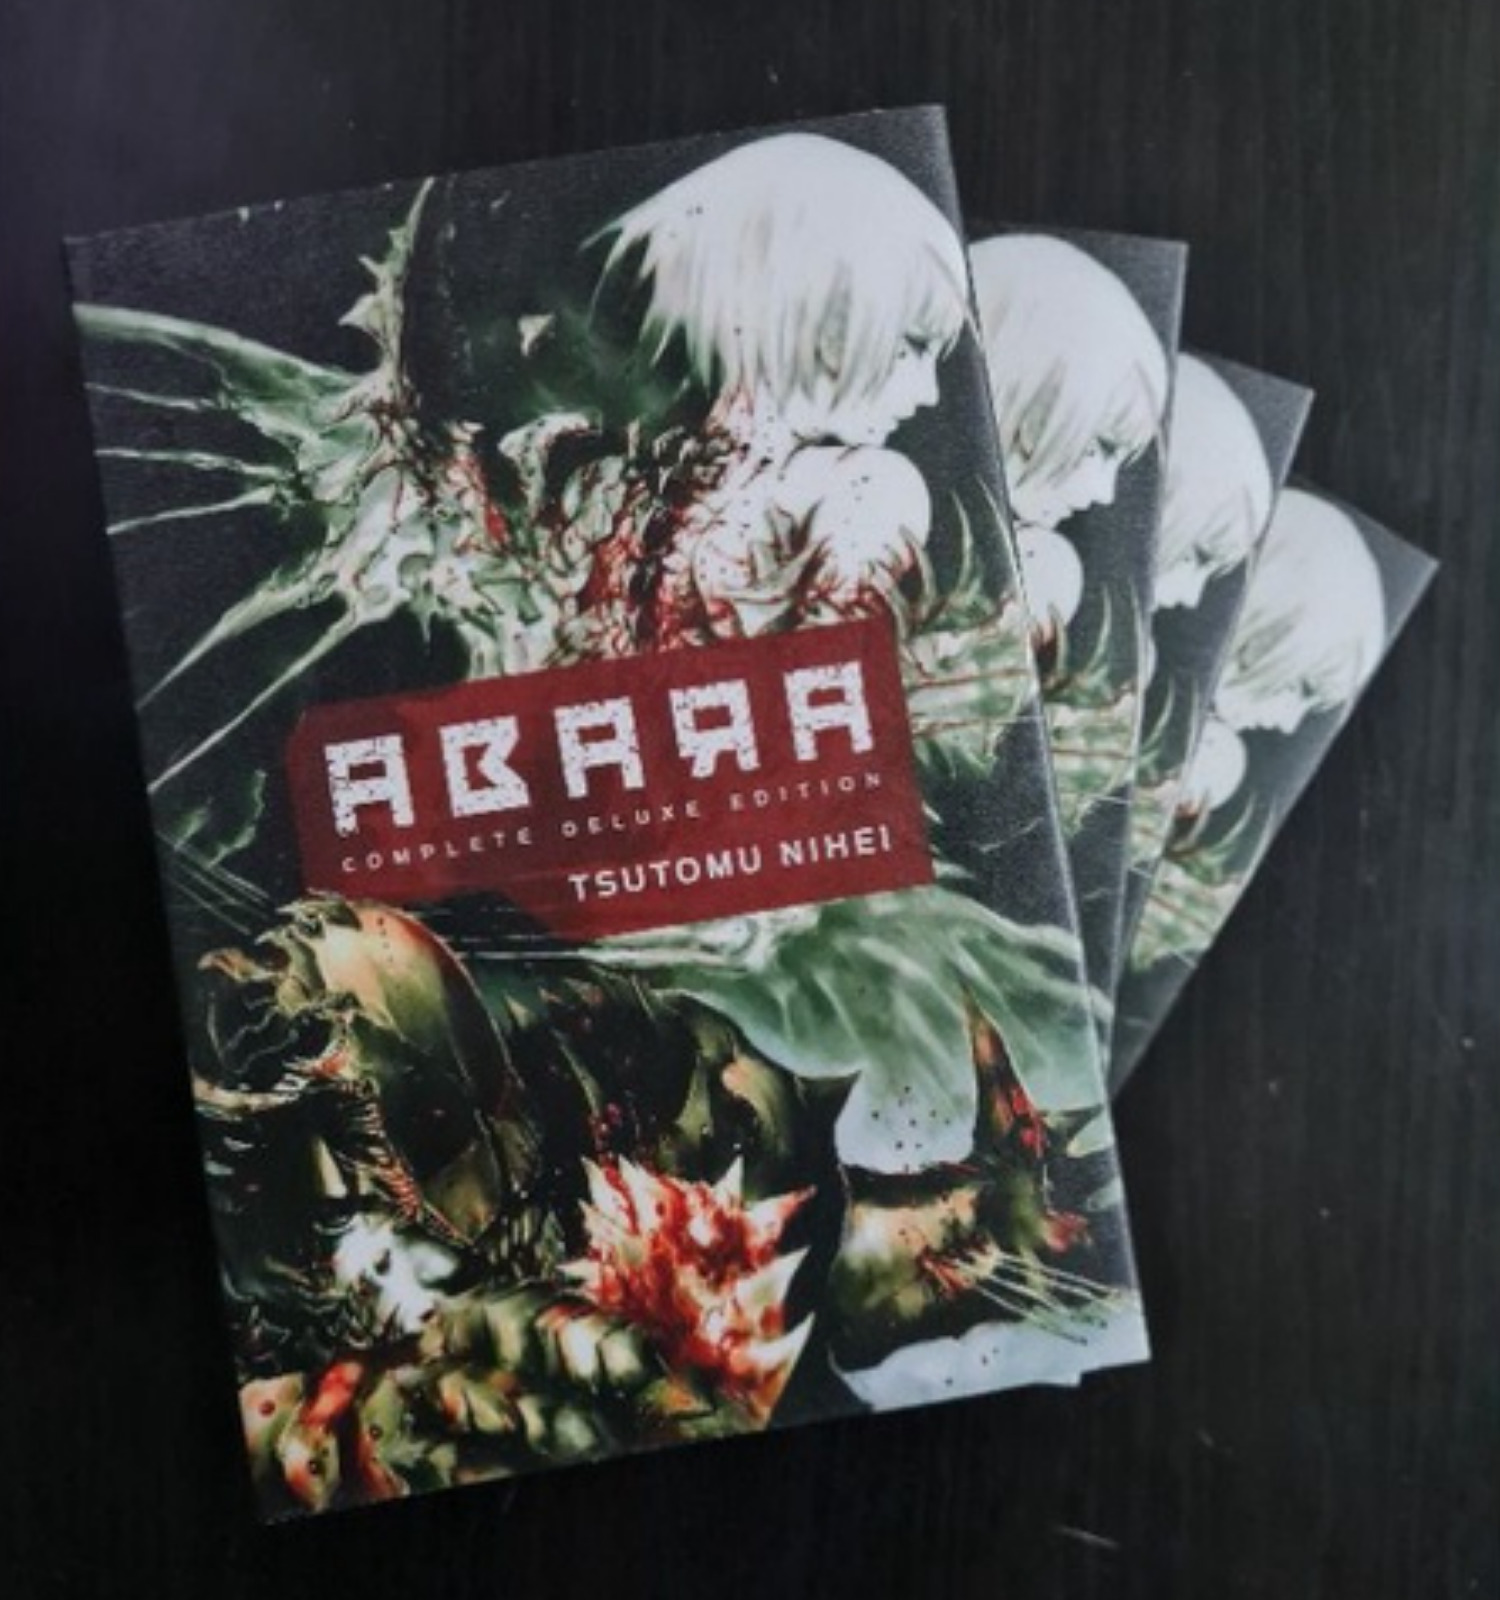 ABARA Manga by Tsutomu Nihei Complete Deluxe Edition English Version Comic Book